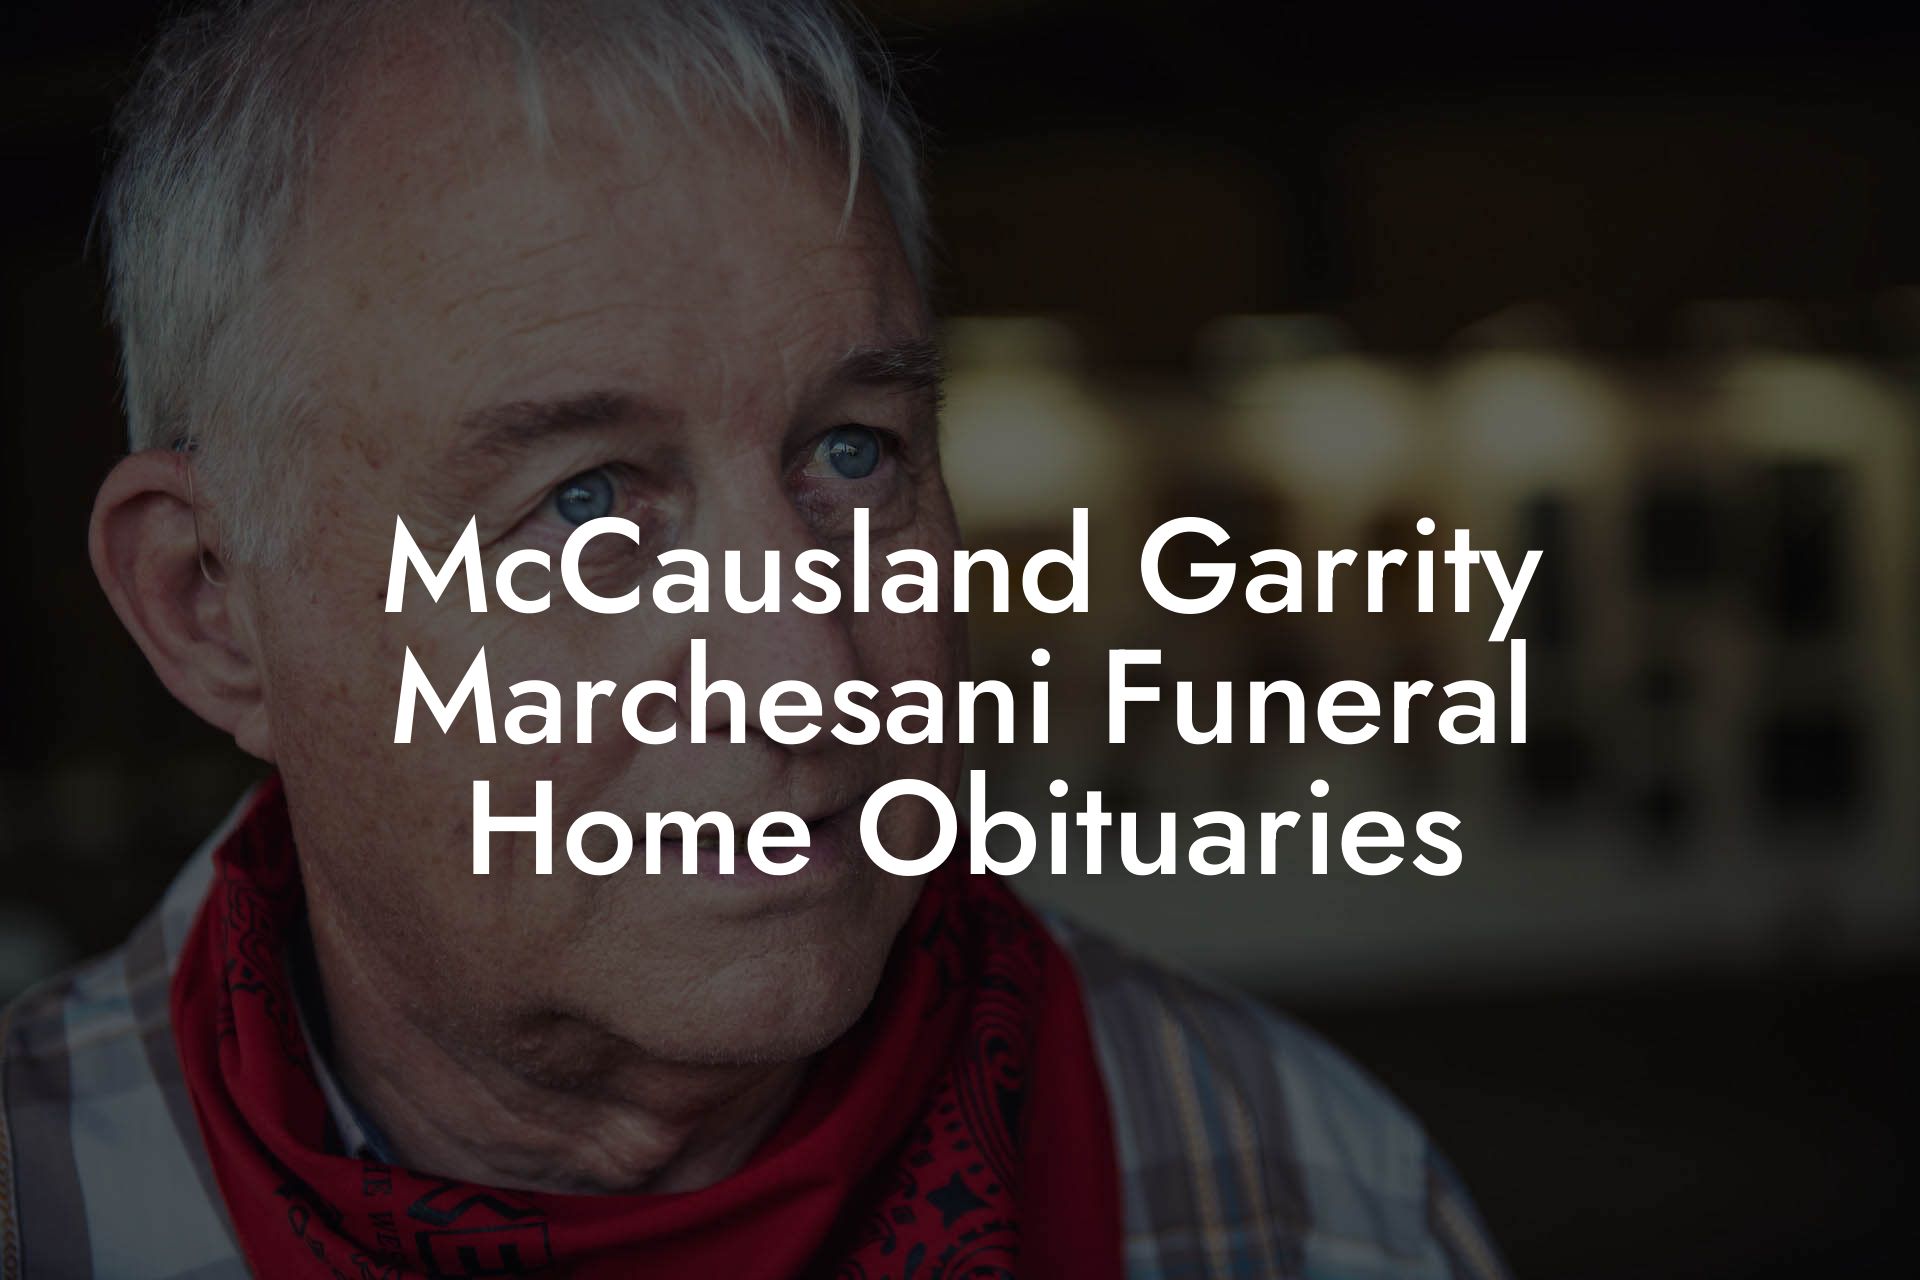 McCausland Garrity Marchesani Funeral Home Obituaries